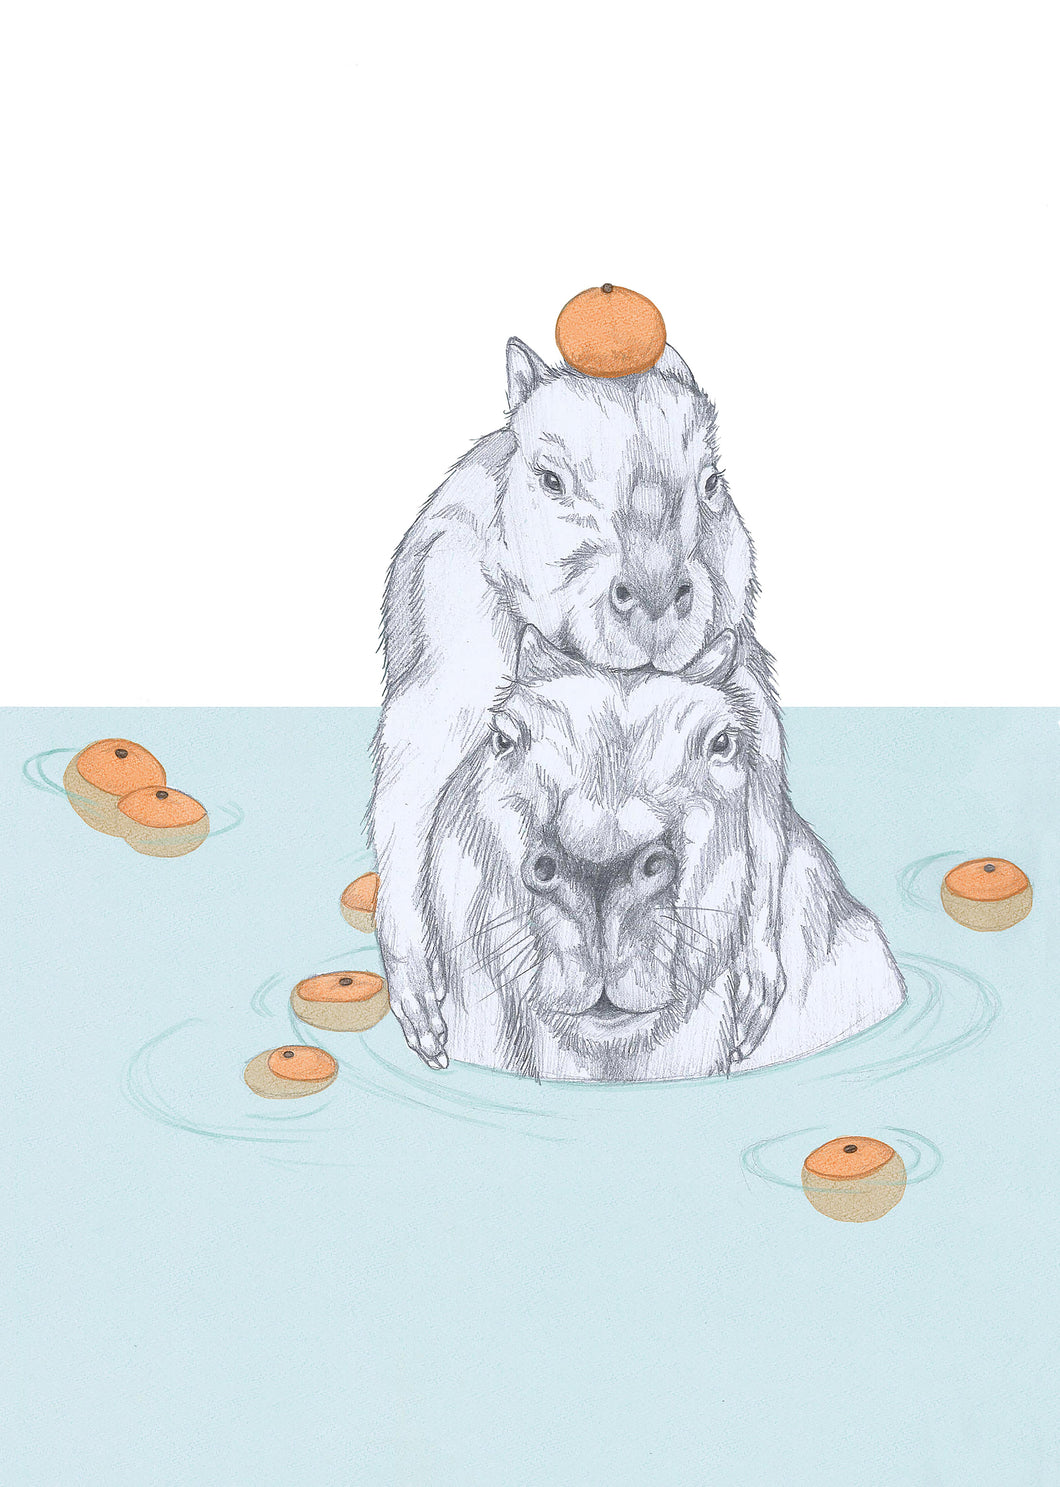 tangerine bath capibaras